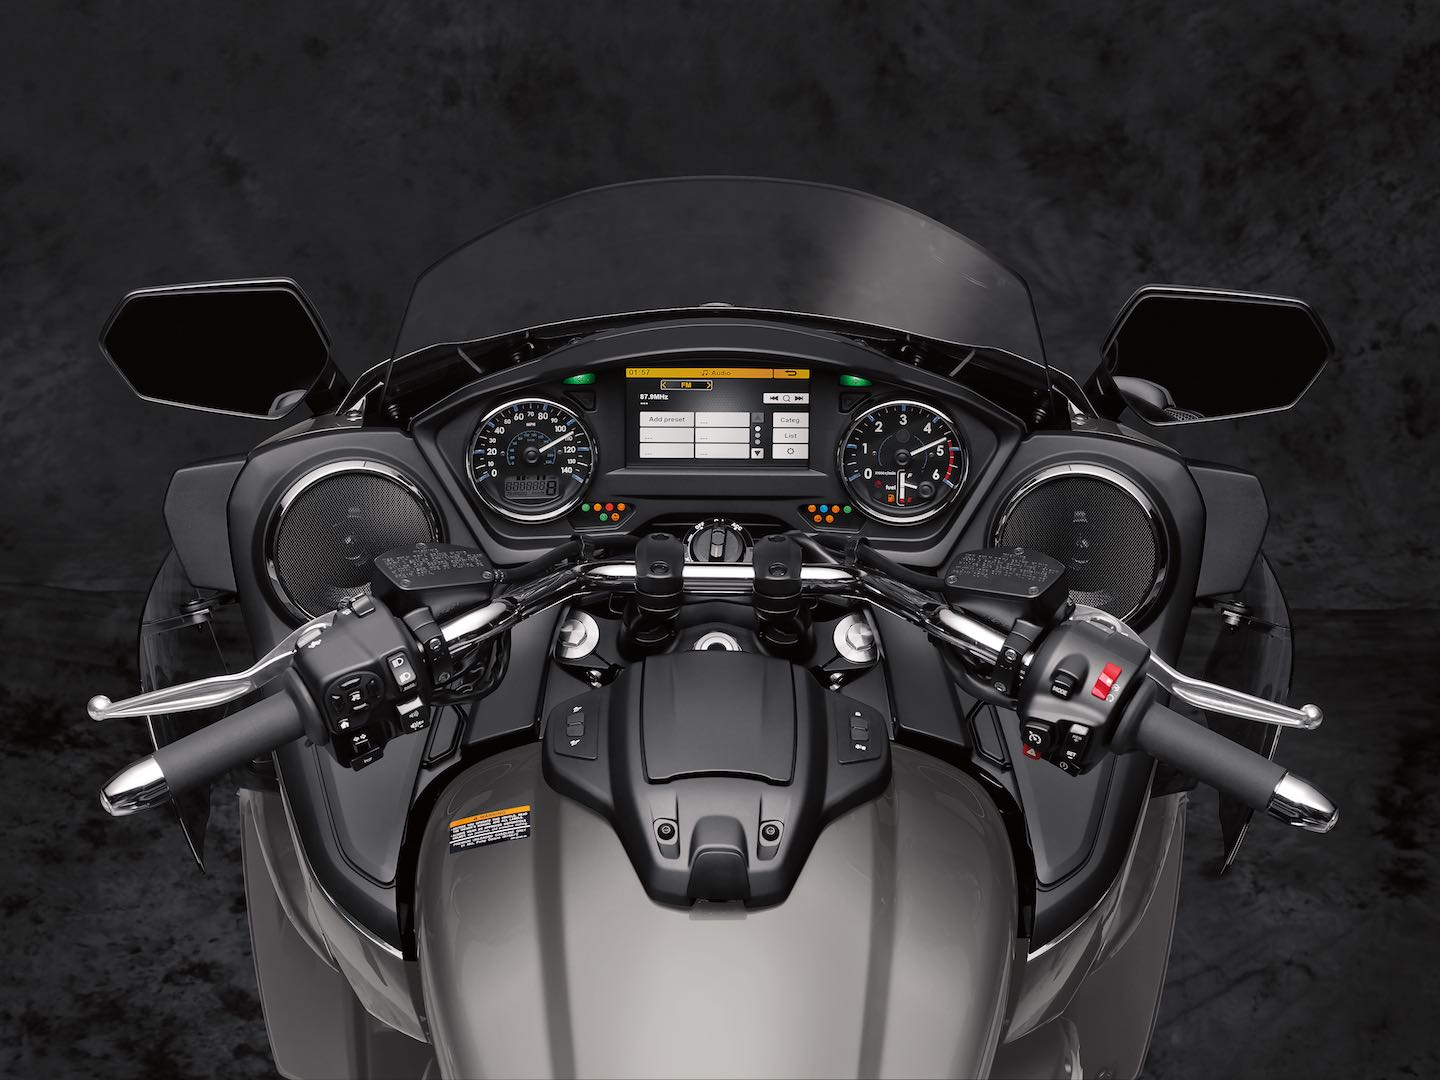 2018 Yamaha Star Venture cockpit